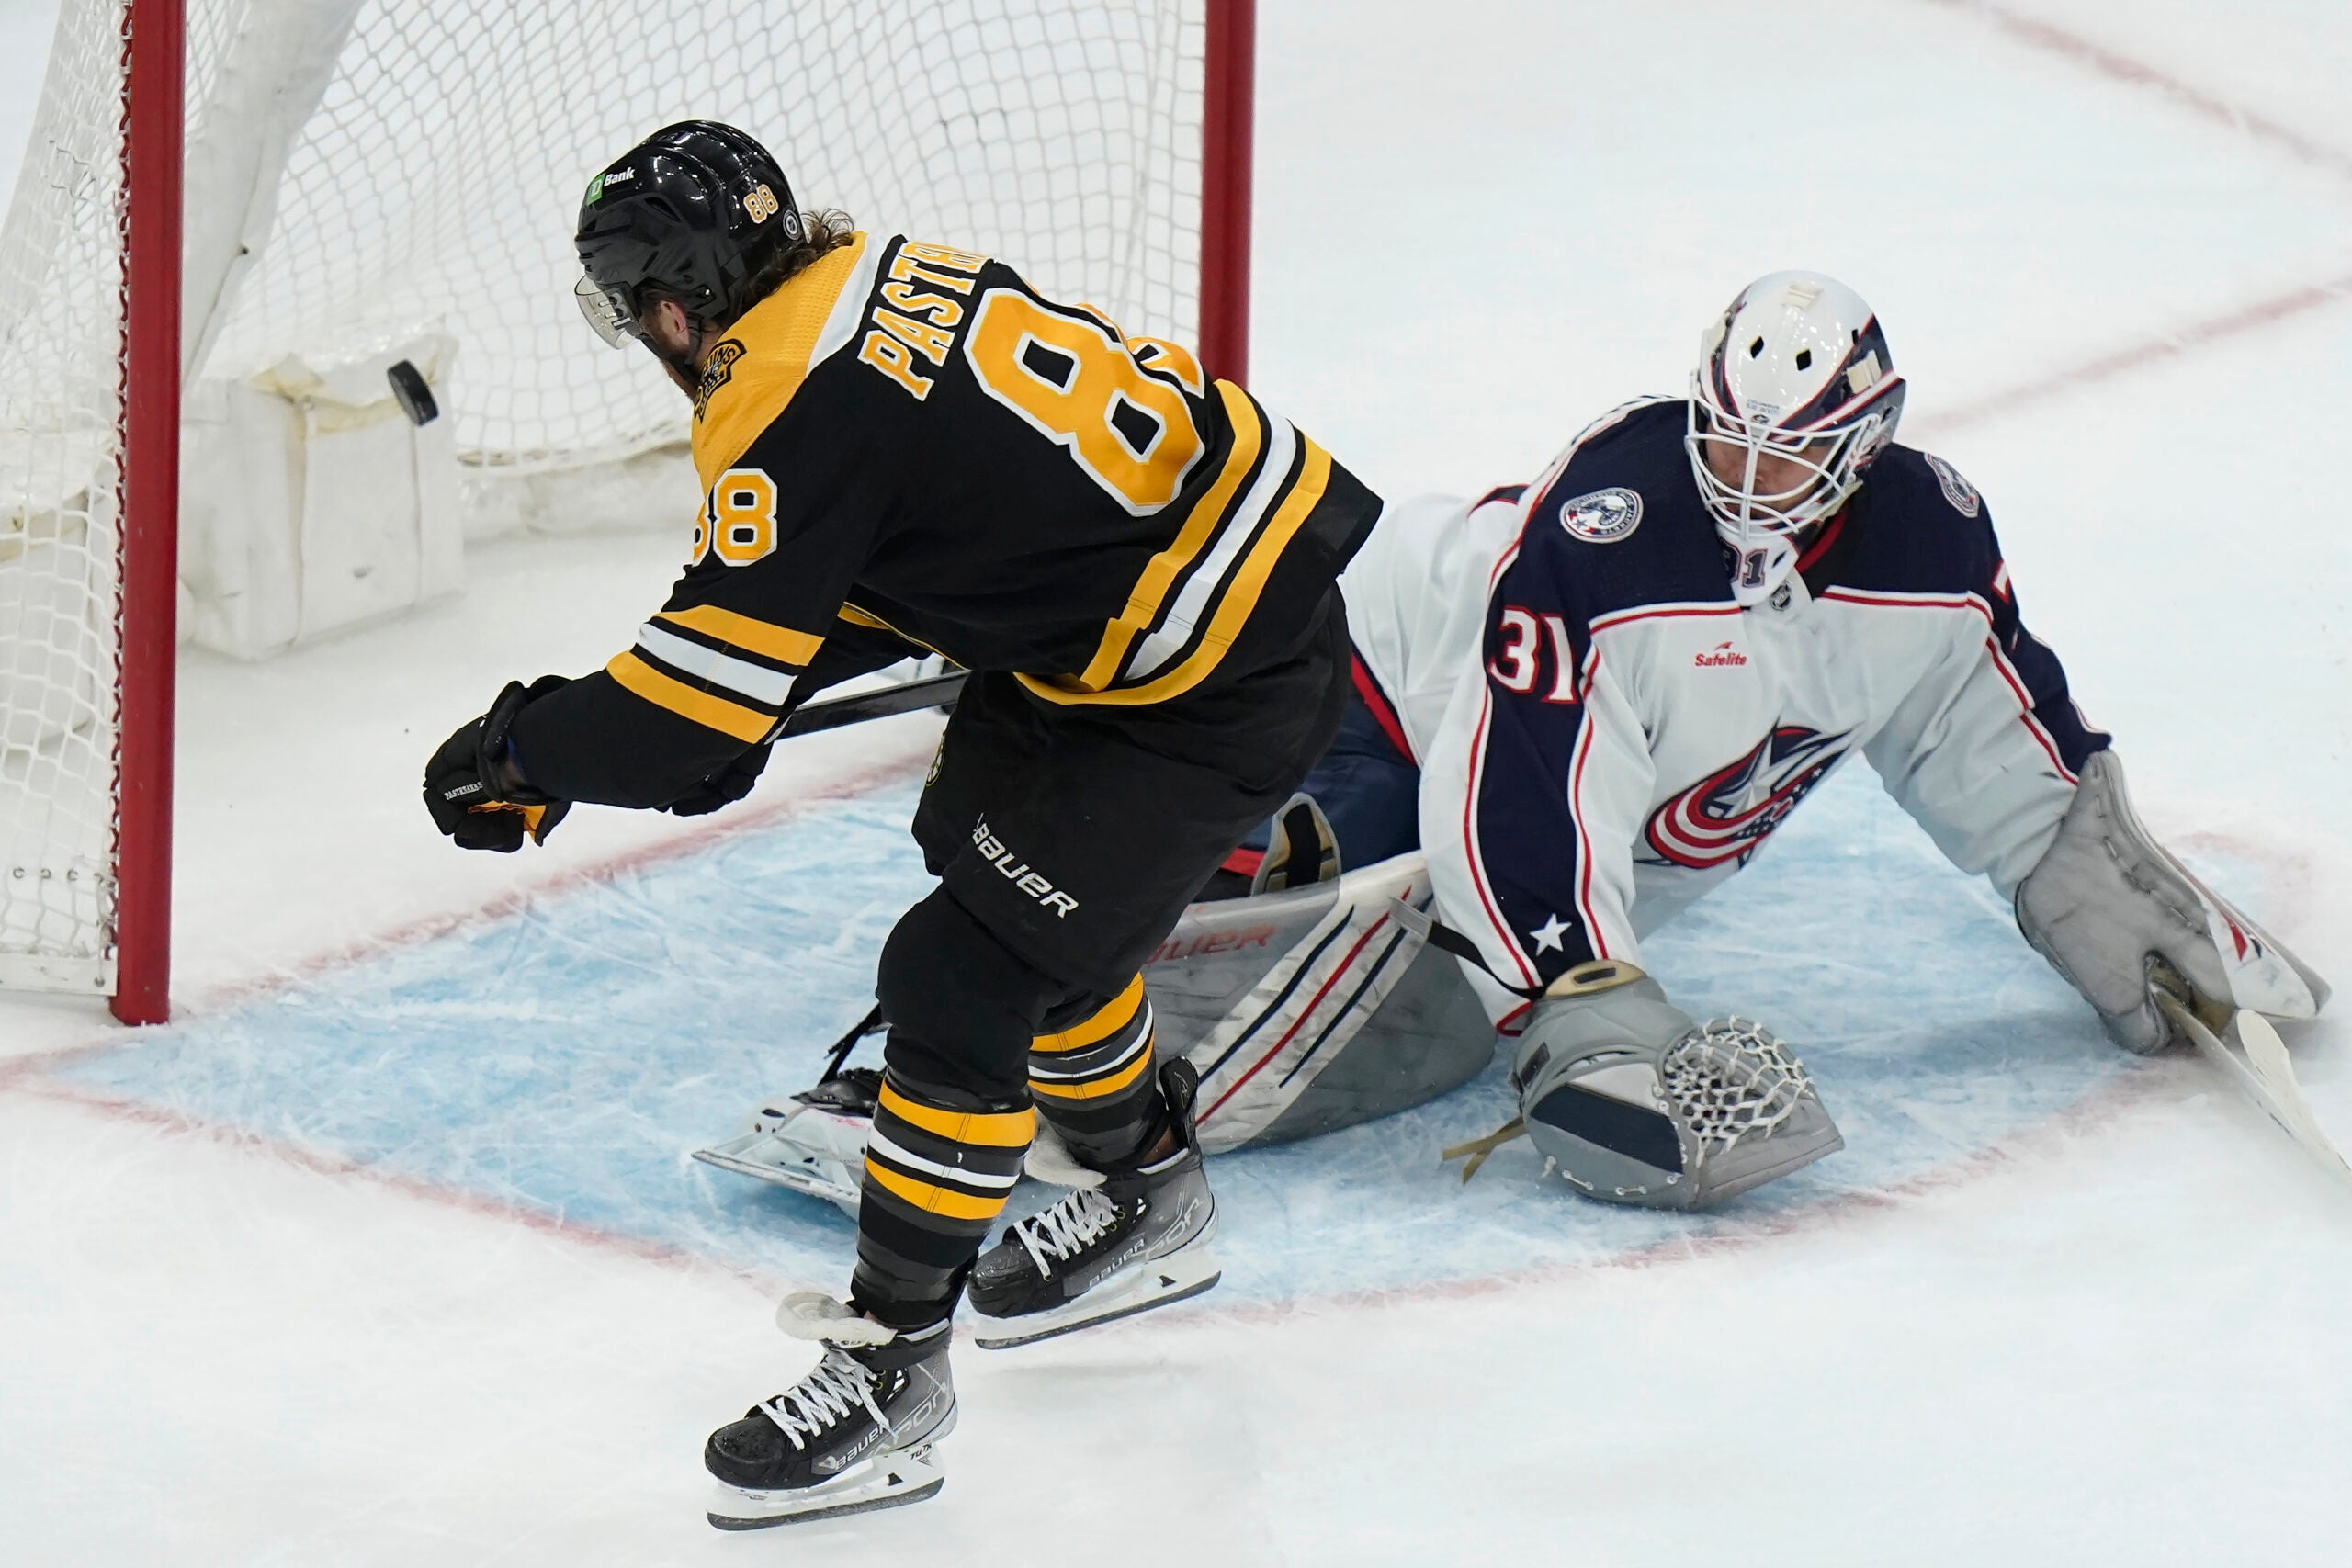 The Bruins David Pastrnak scores the winning goal